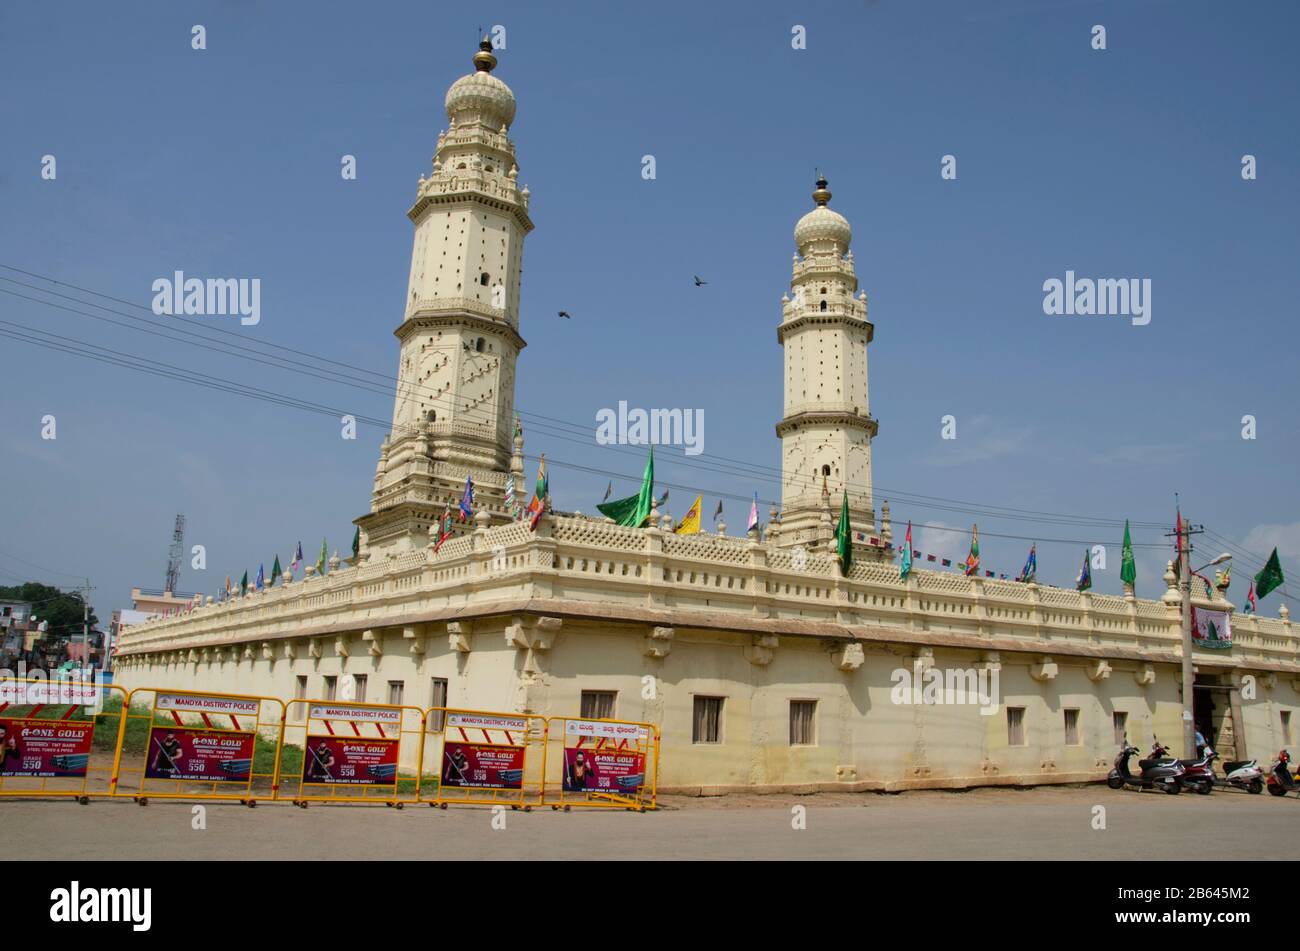 Juma mosque or Jama Masjid, built by Tipu in Indo-Islamic architecture is one of the major mosques inside the fort, Srirangapatna, Karnataka, India Stock Photo